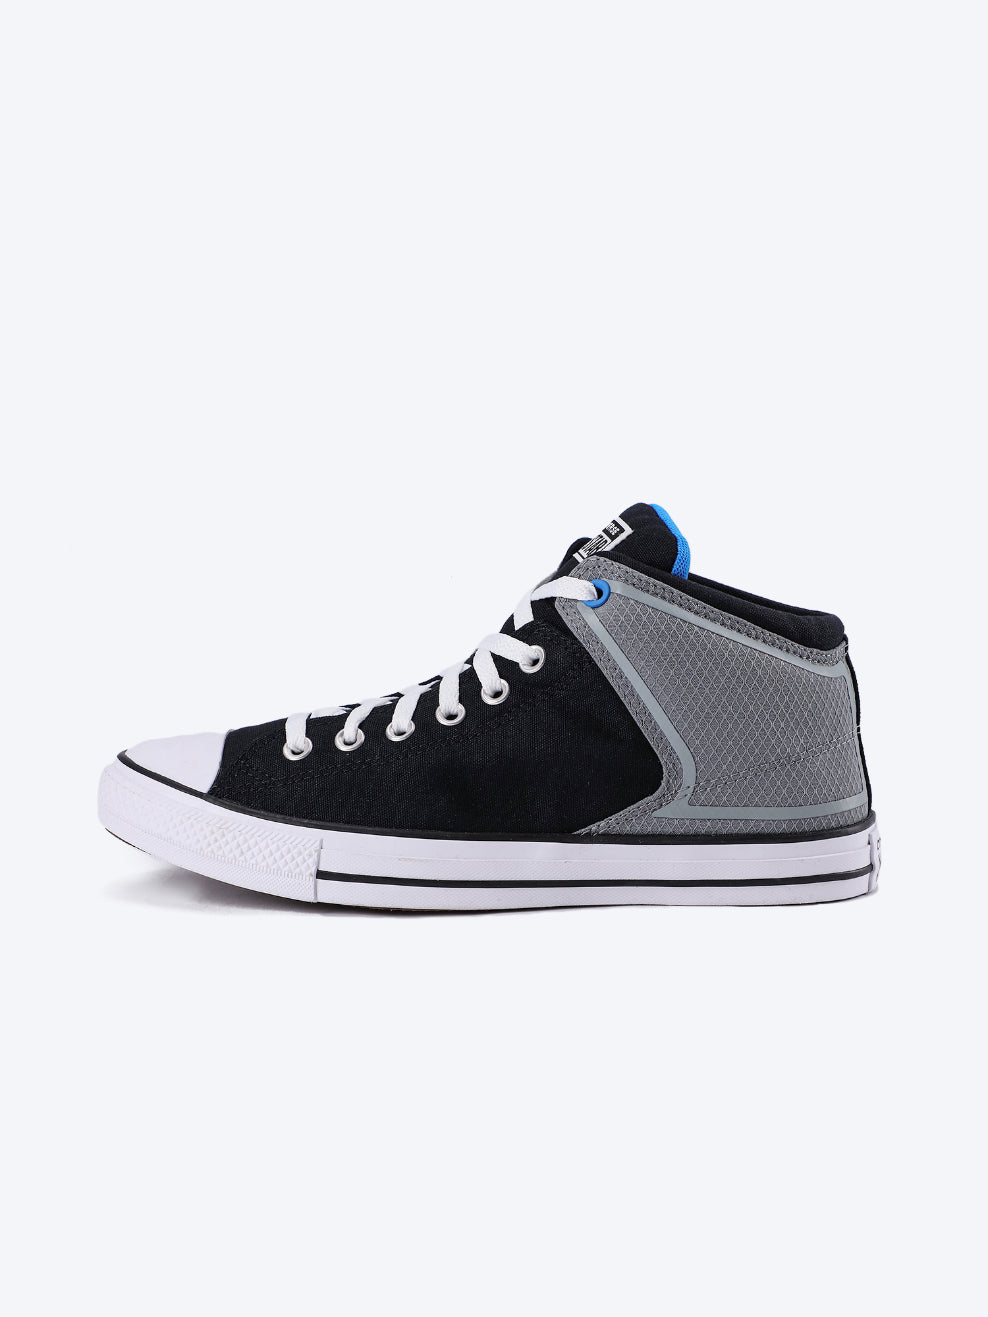 Converse Men's Chuck Taylor All Star High Street Sneakers - 170515C